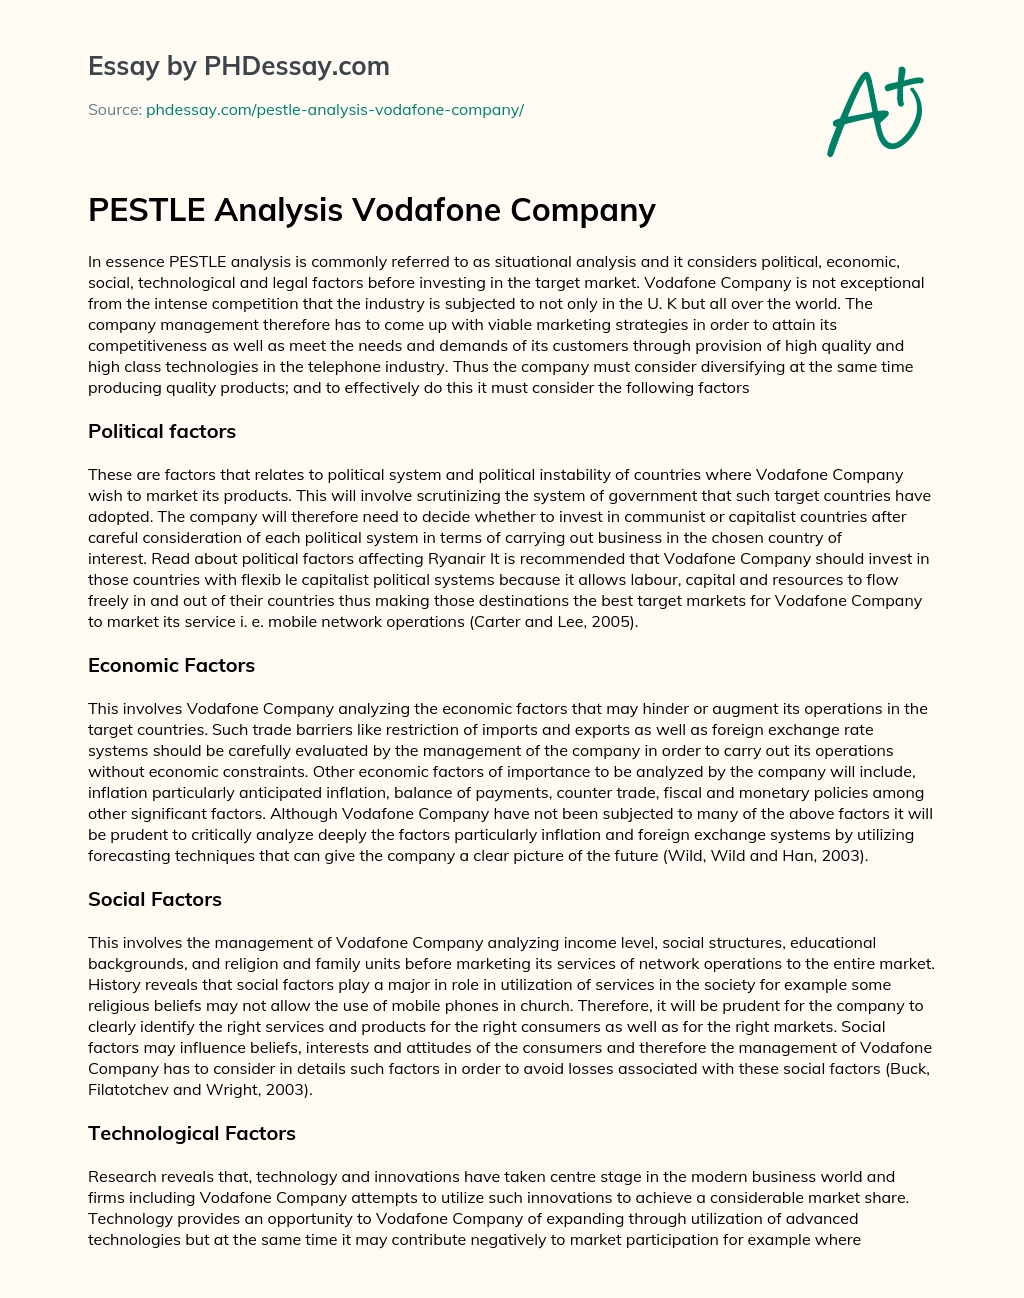 PESTLE Analysis Vodafone Company essay